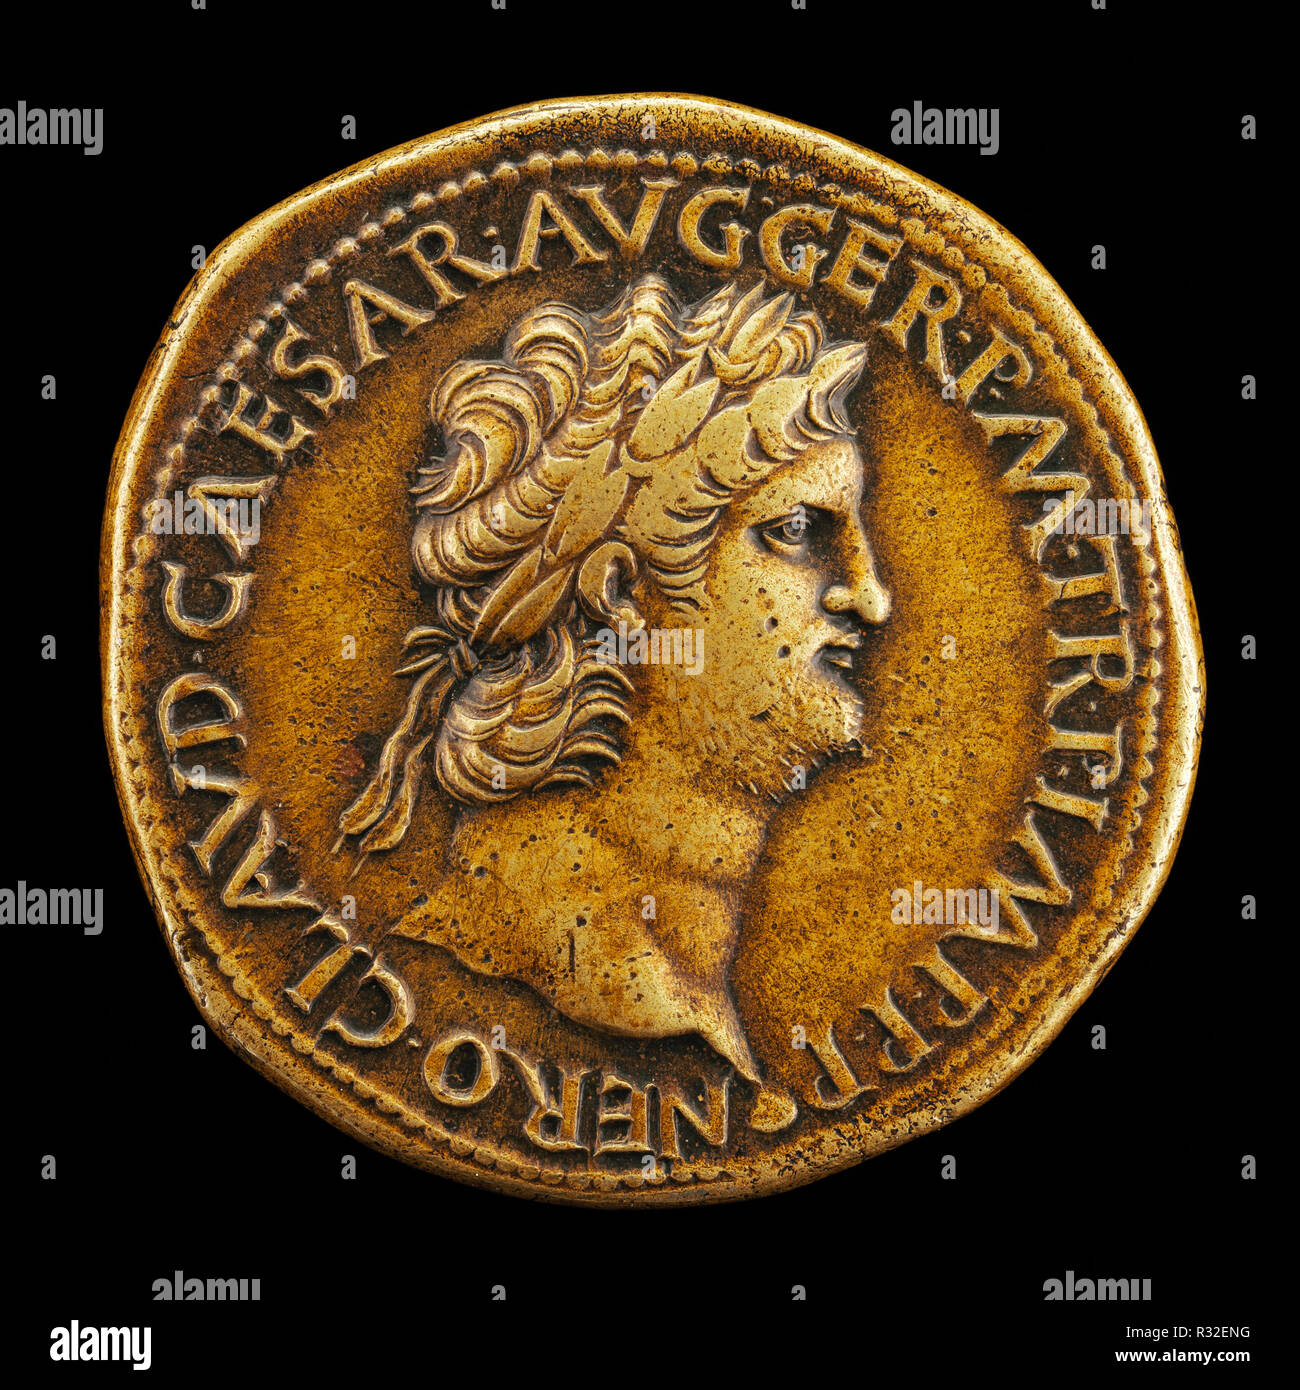 Nero, A.D. 37-68, Roman Emperor A.D. 54 [obverse]. Dimensions: overall (diameter): 3.55 cm (1 3/8 in.)  gross weight: 24.07 gr (0.053 lb.)  axis: 7:00. Medium: bronze//Struck. Museum: National Gallery of Art, Washington DC. Author: Giovanni da Cavino. Stock Photo